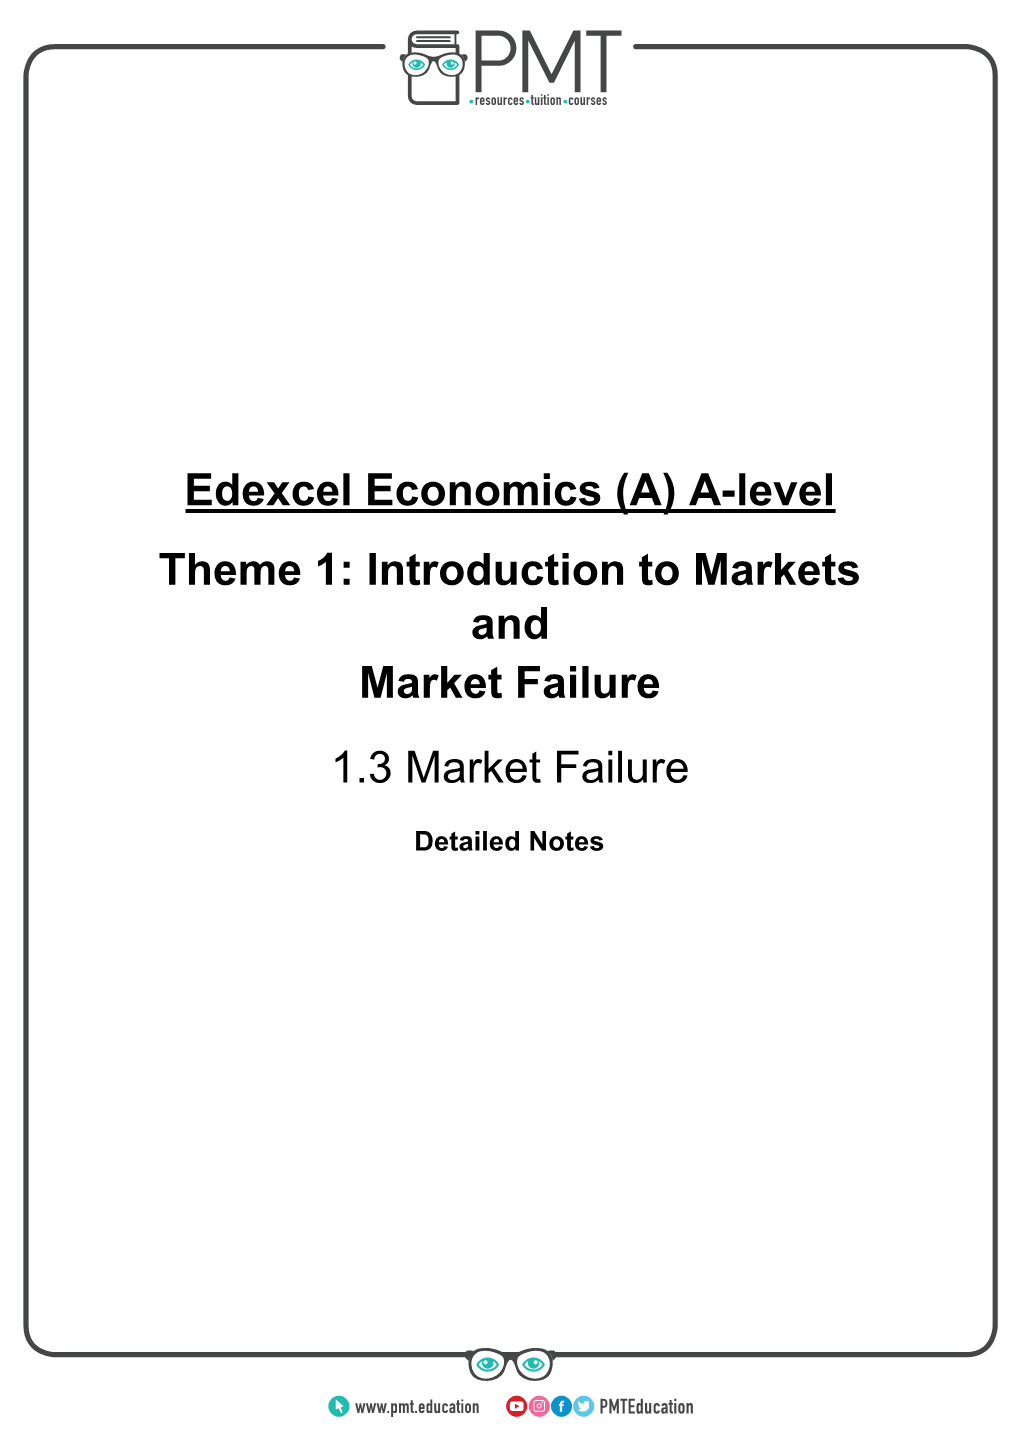 Topic 1.3. Market Failure